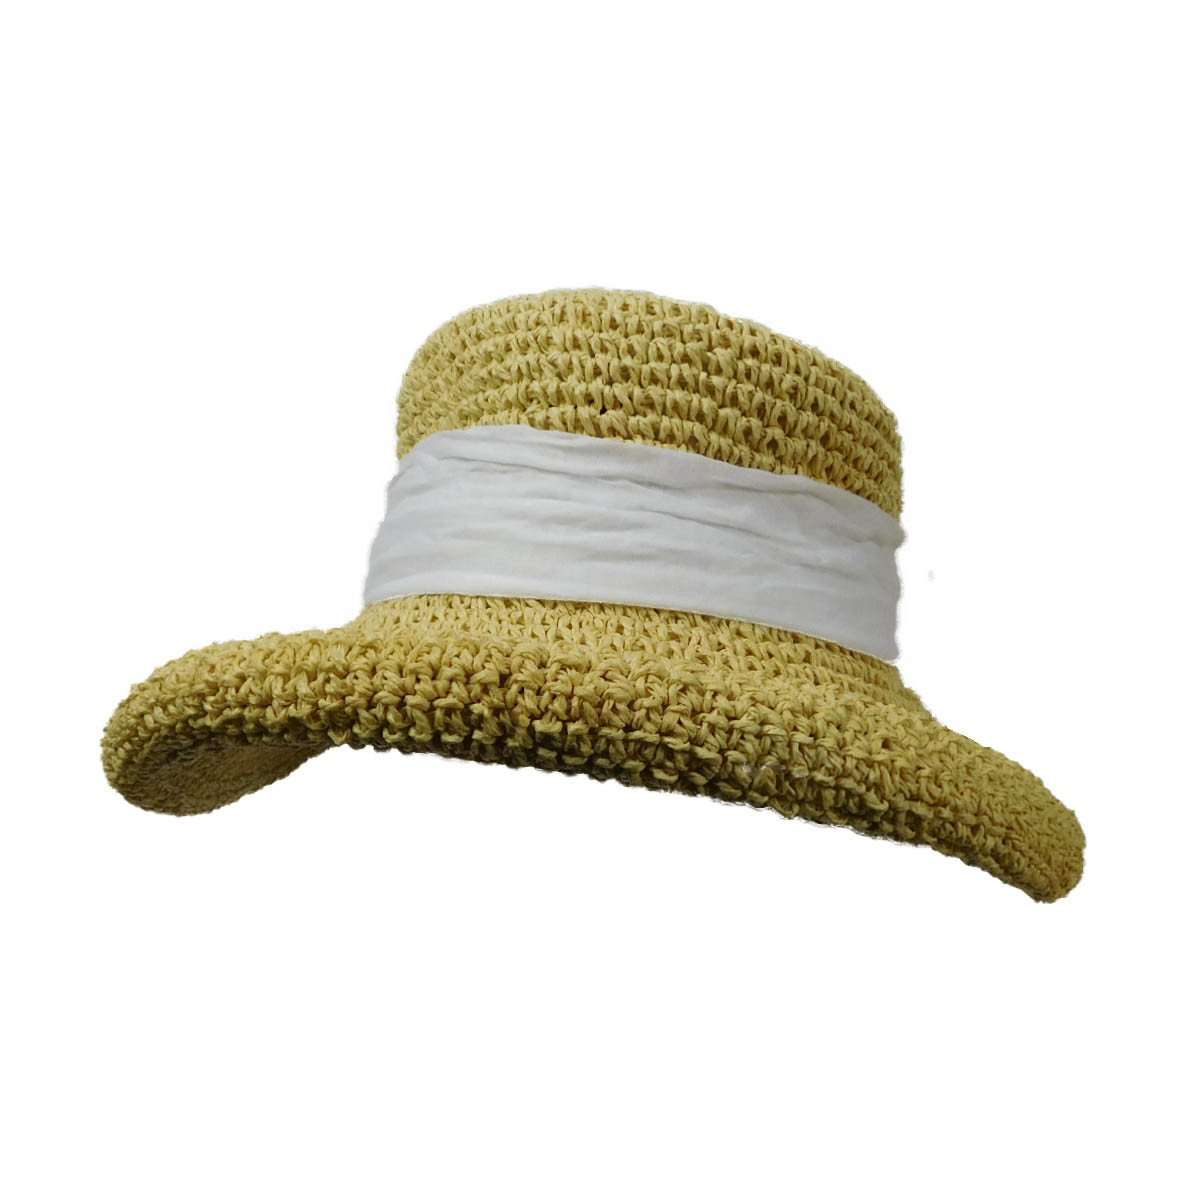 Rolled Brim Toyo Straw Hat with Gauze Tie - Scala Pronto Kettle Brim Hat Scala Hats    